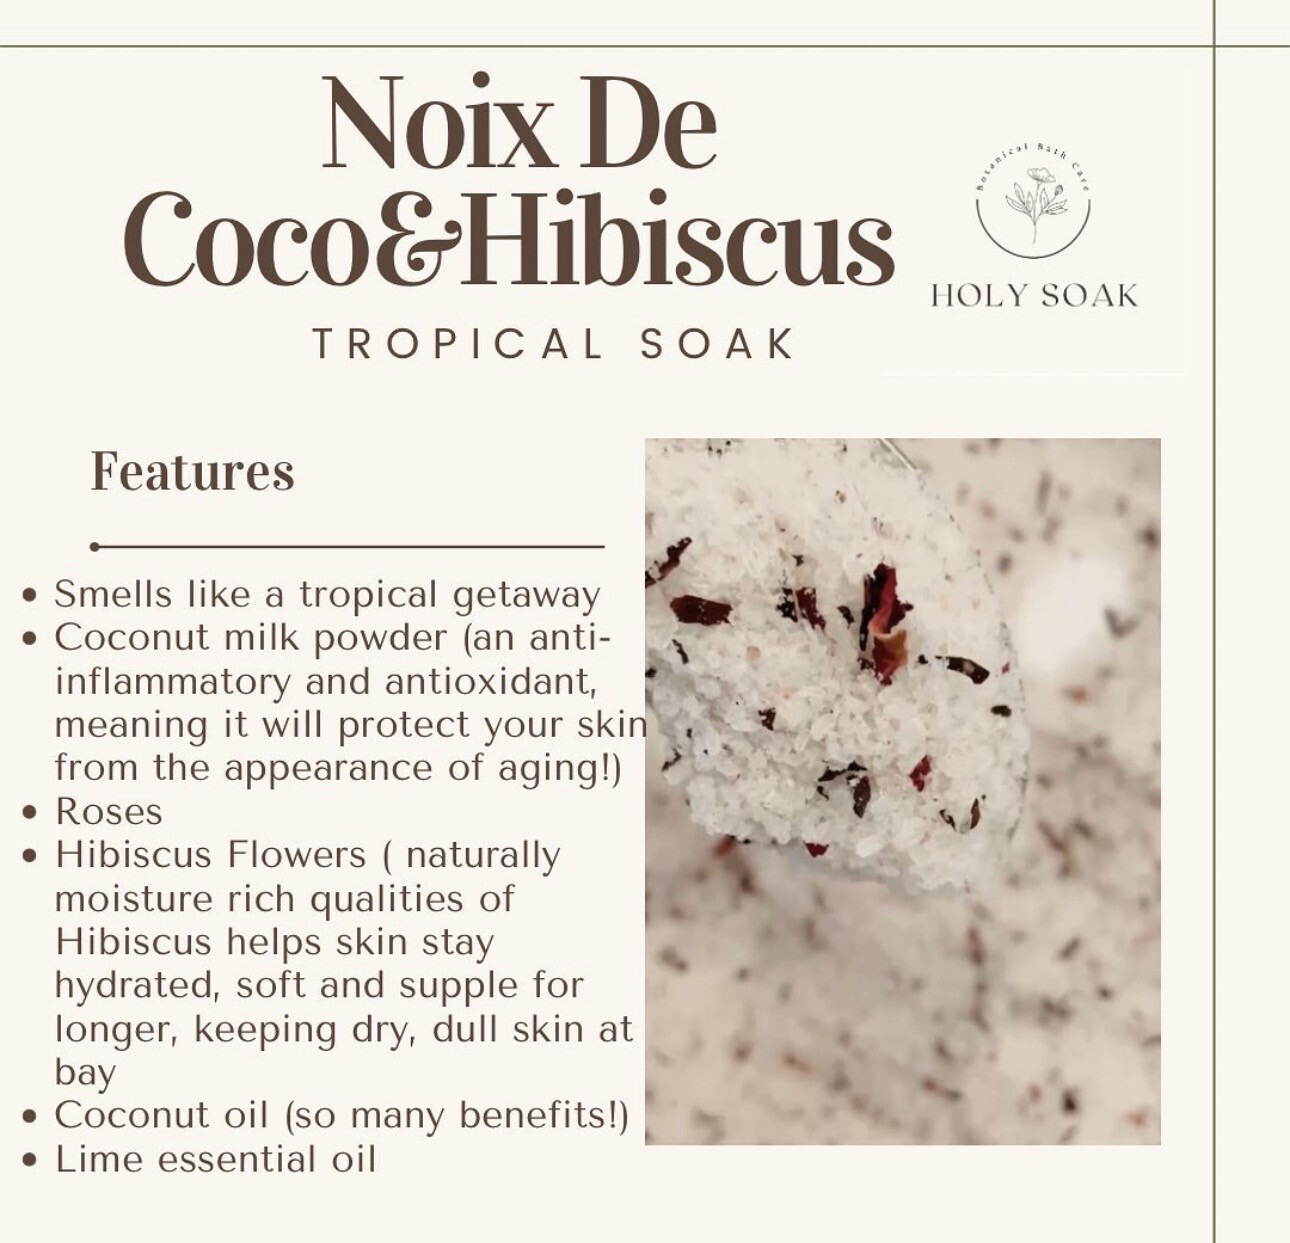 Noix De Coco & Hibiscus Soak